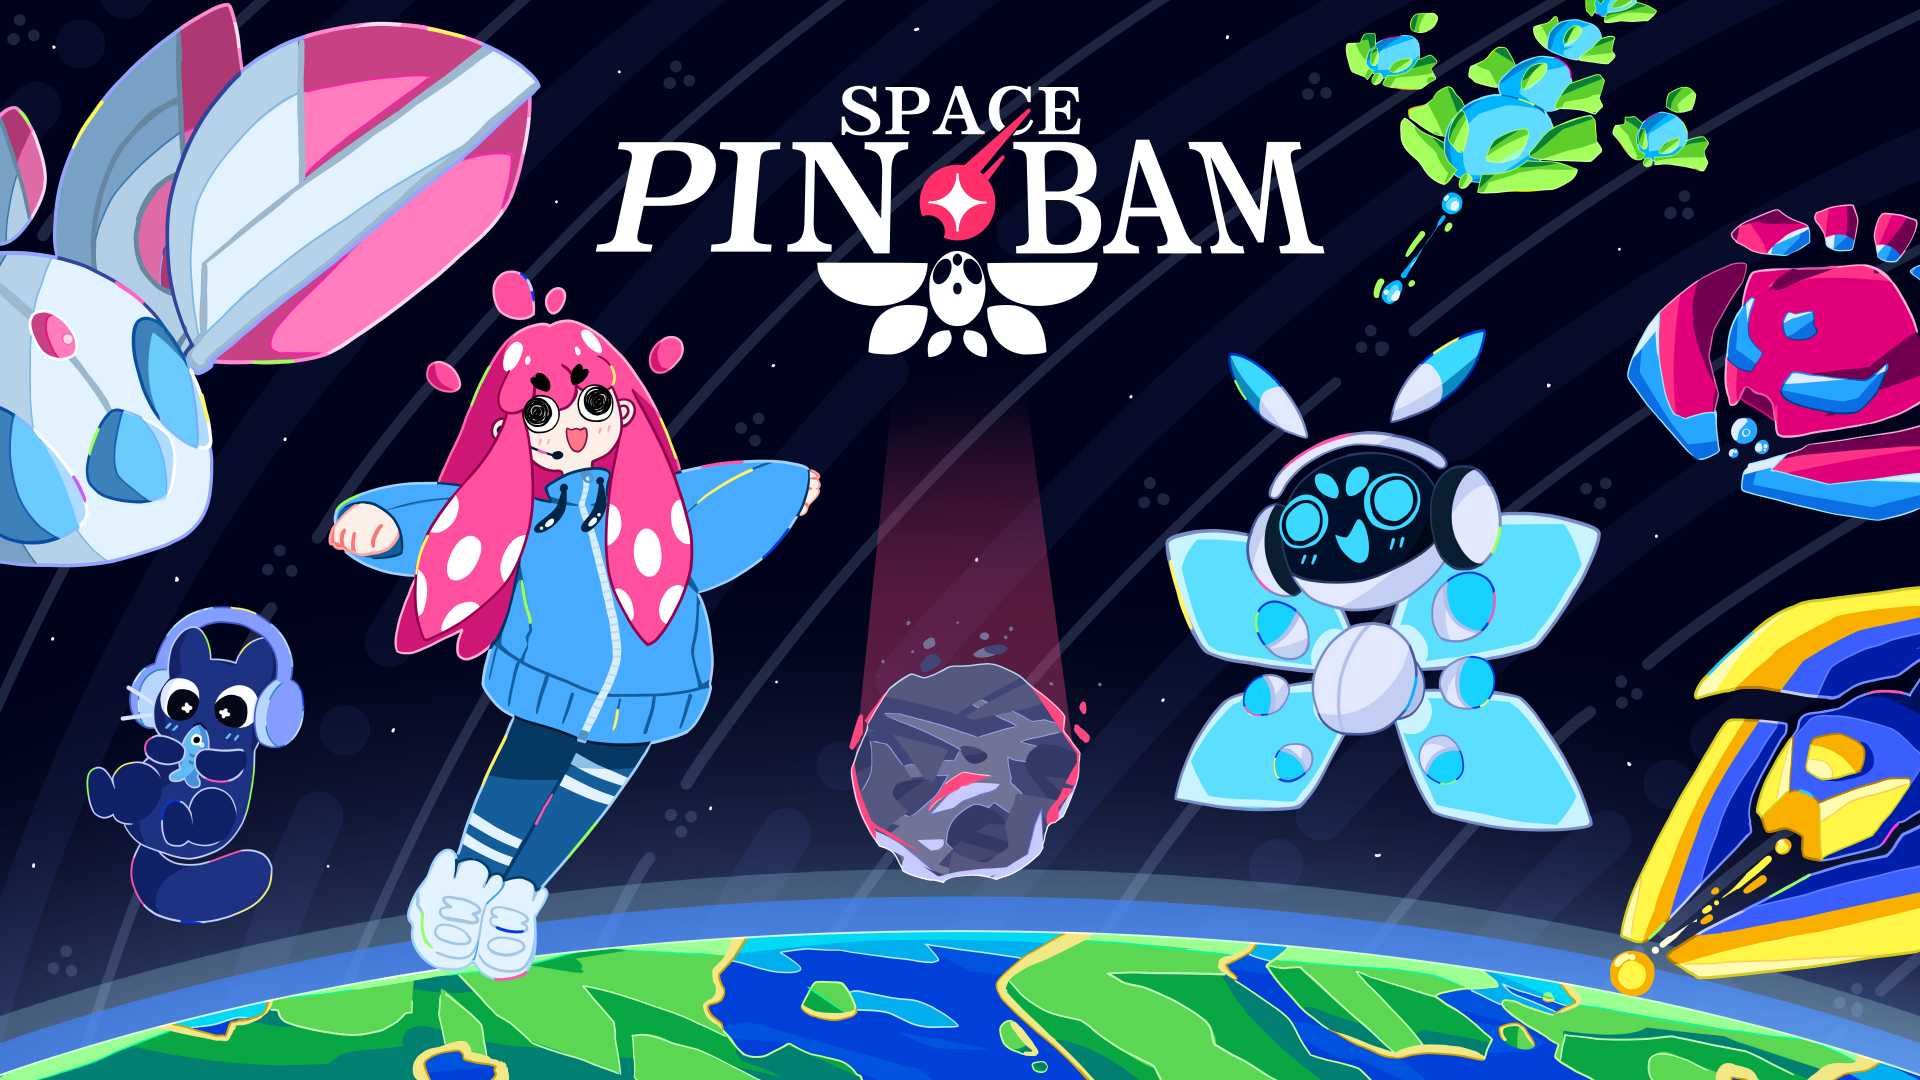 Space Pinbam